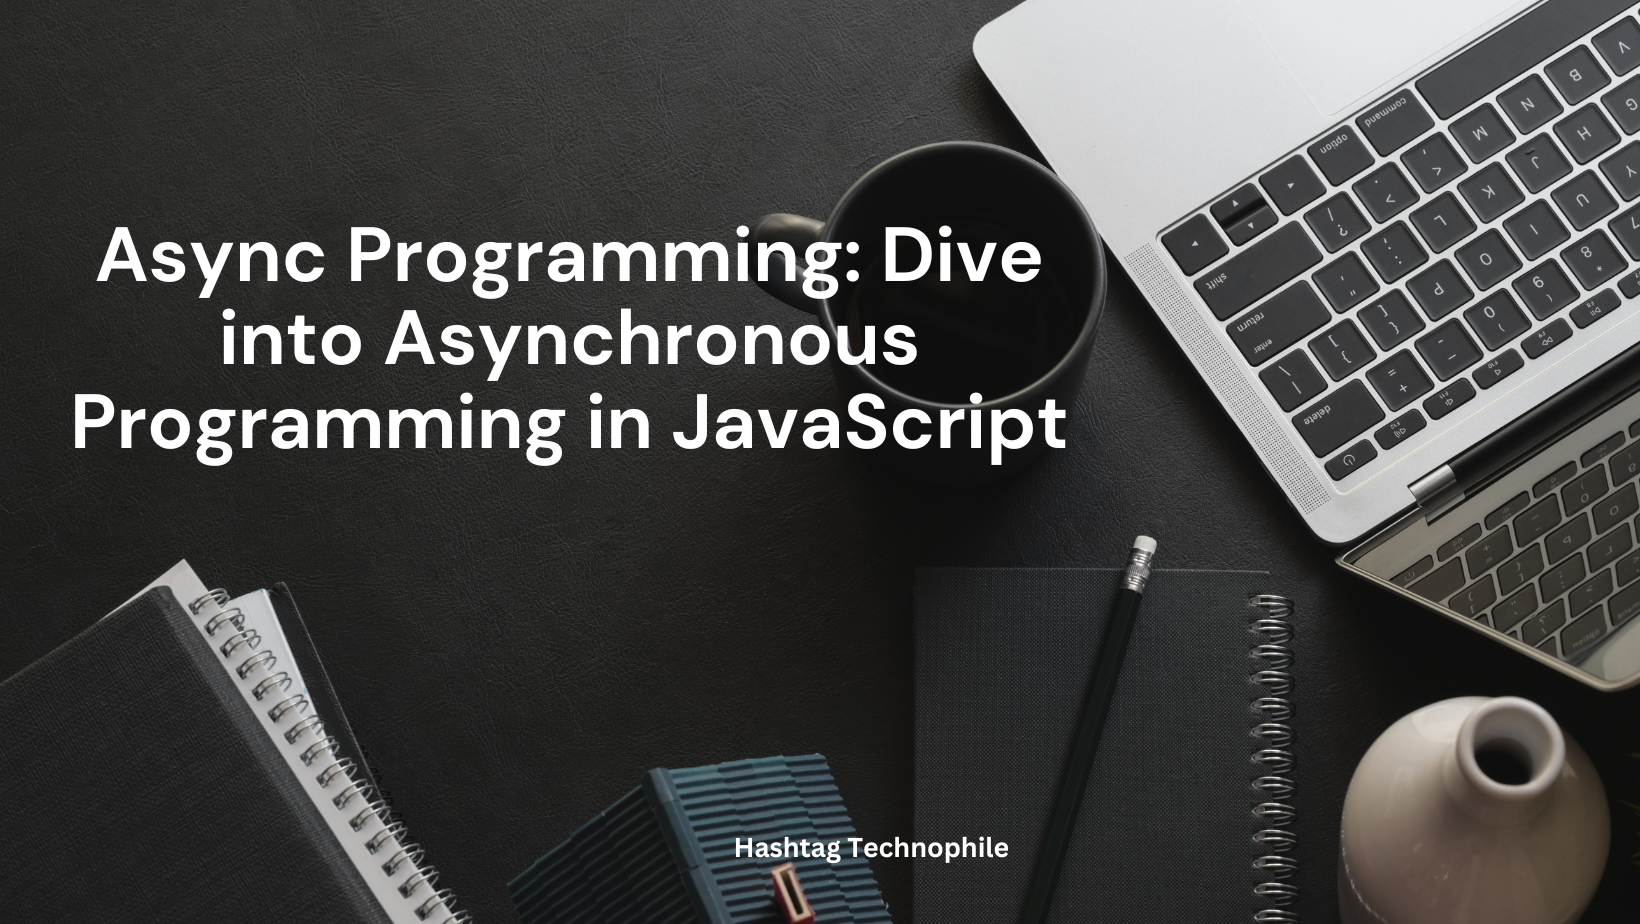 Asynch programming in Javascript